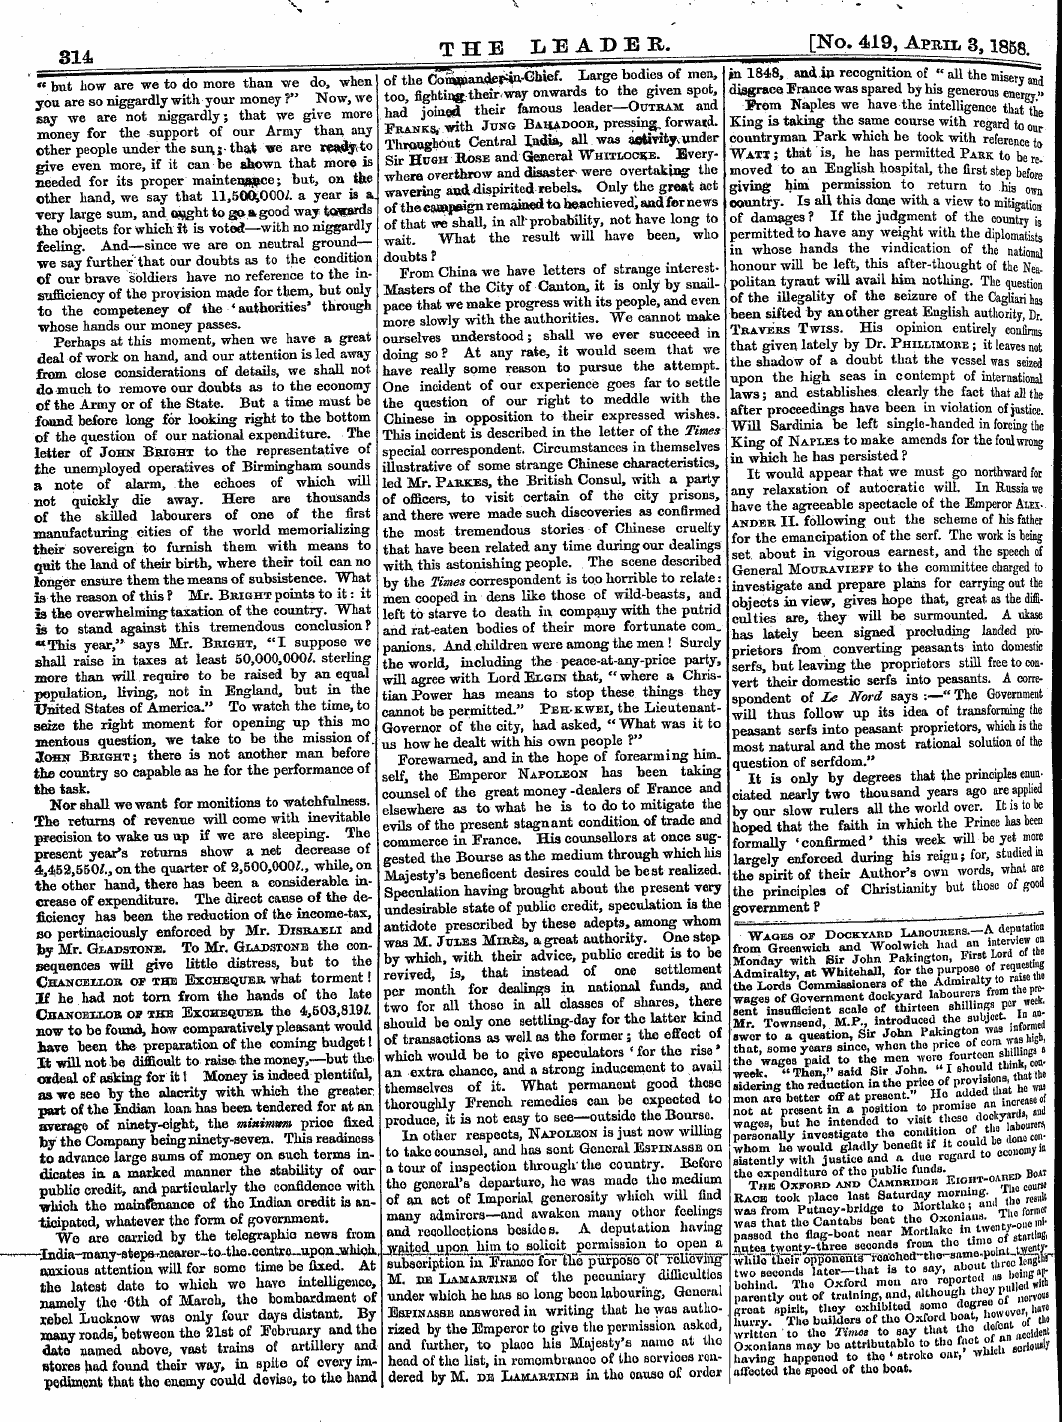 Leader (1850-1860): jS F Y, 2nd edition - 314 The Leader. [No. 419, Apbtl 3^58. Of